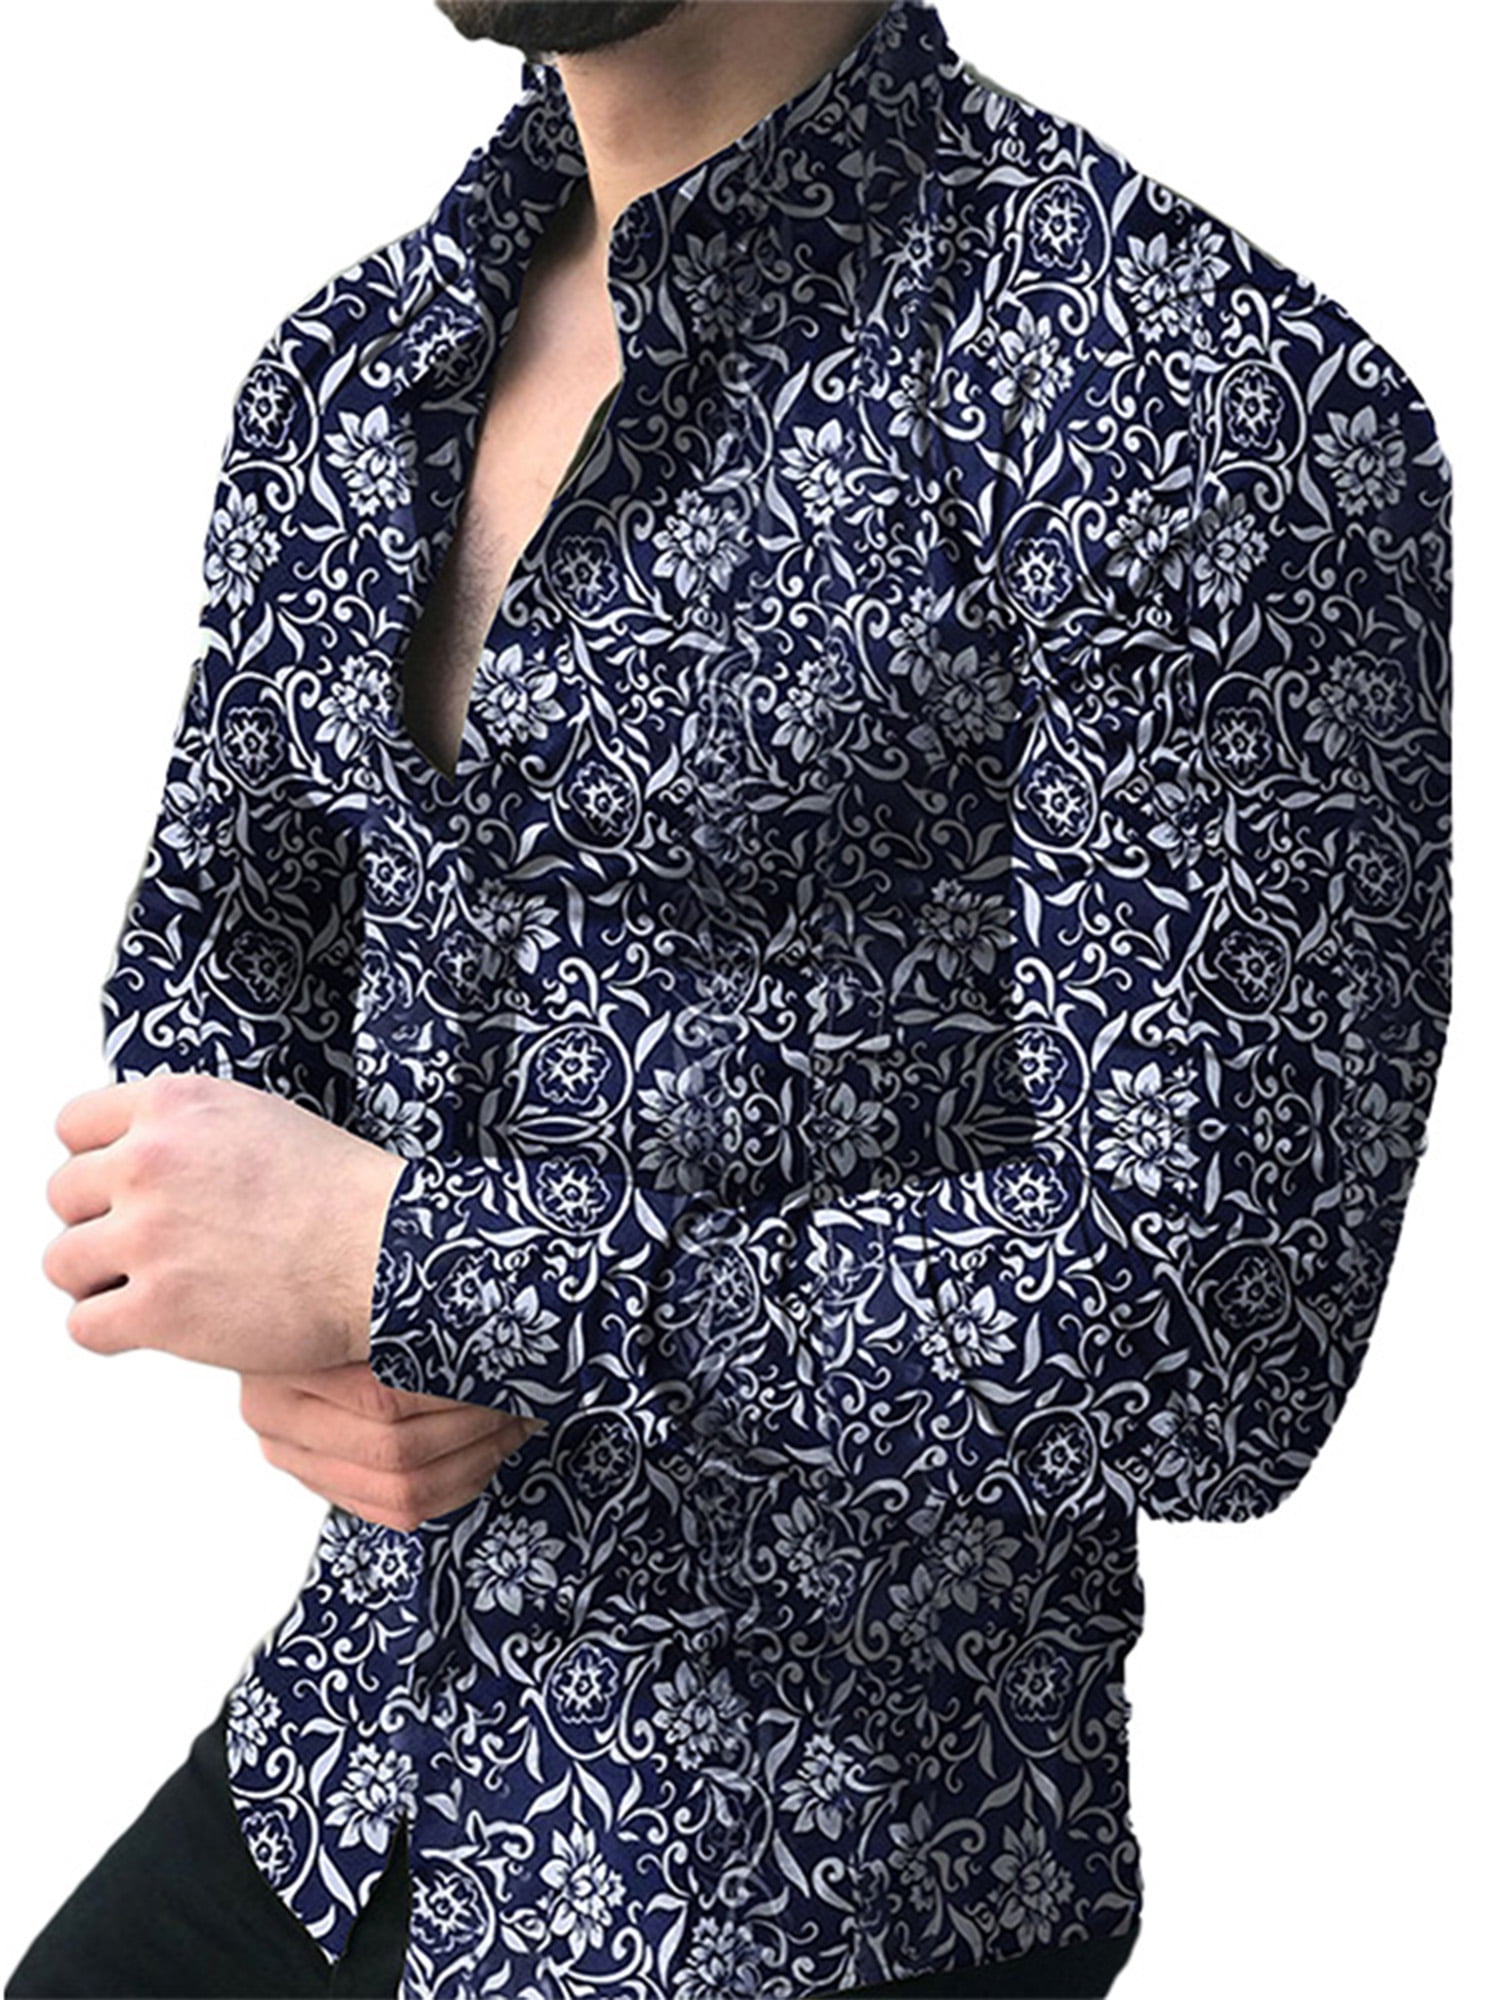 Mfasica Men Spring/Fall Long Sleeve Floral Printing Classic-Fit Dress Shirts 